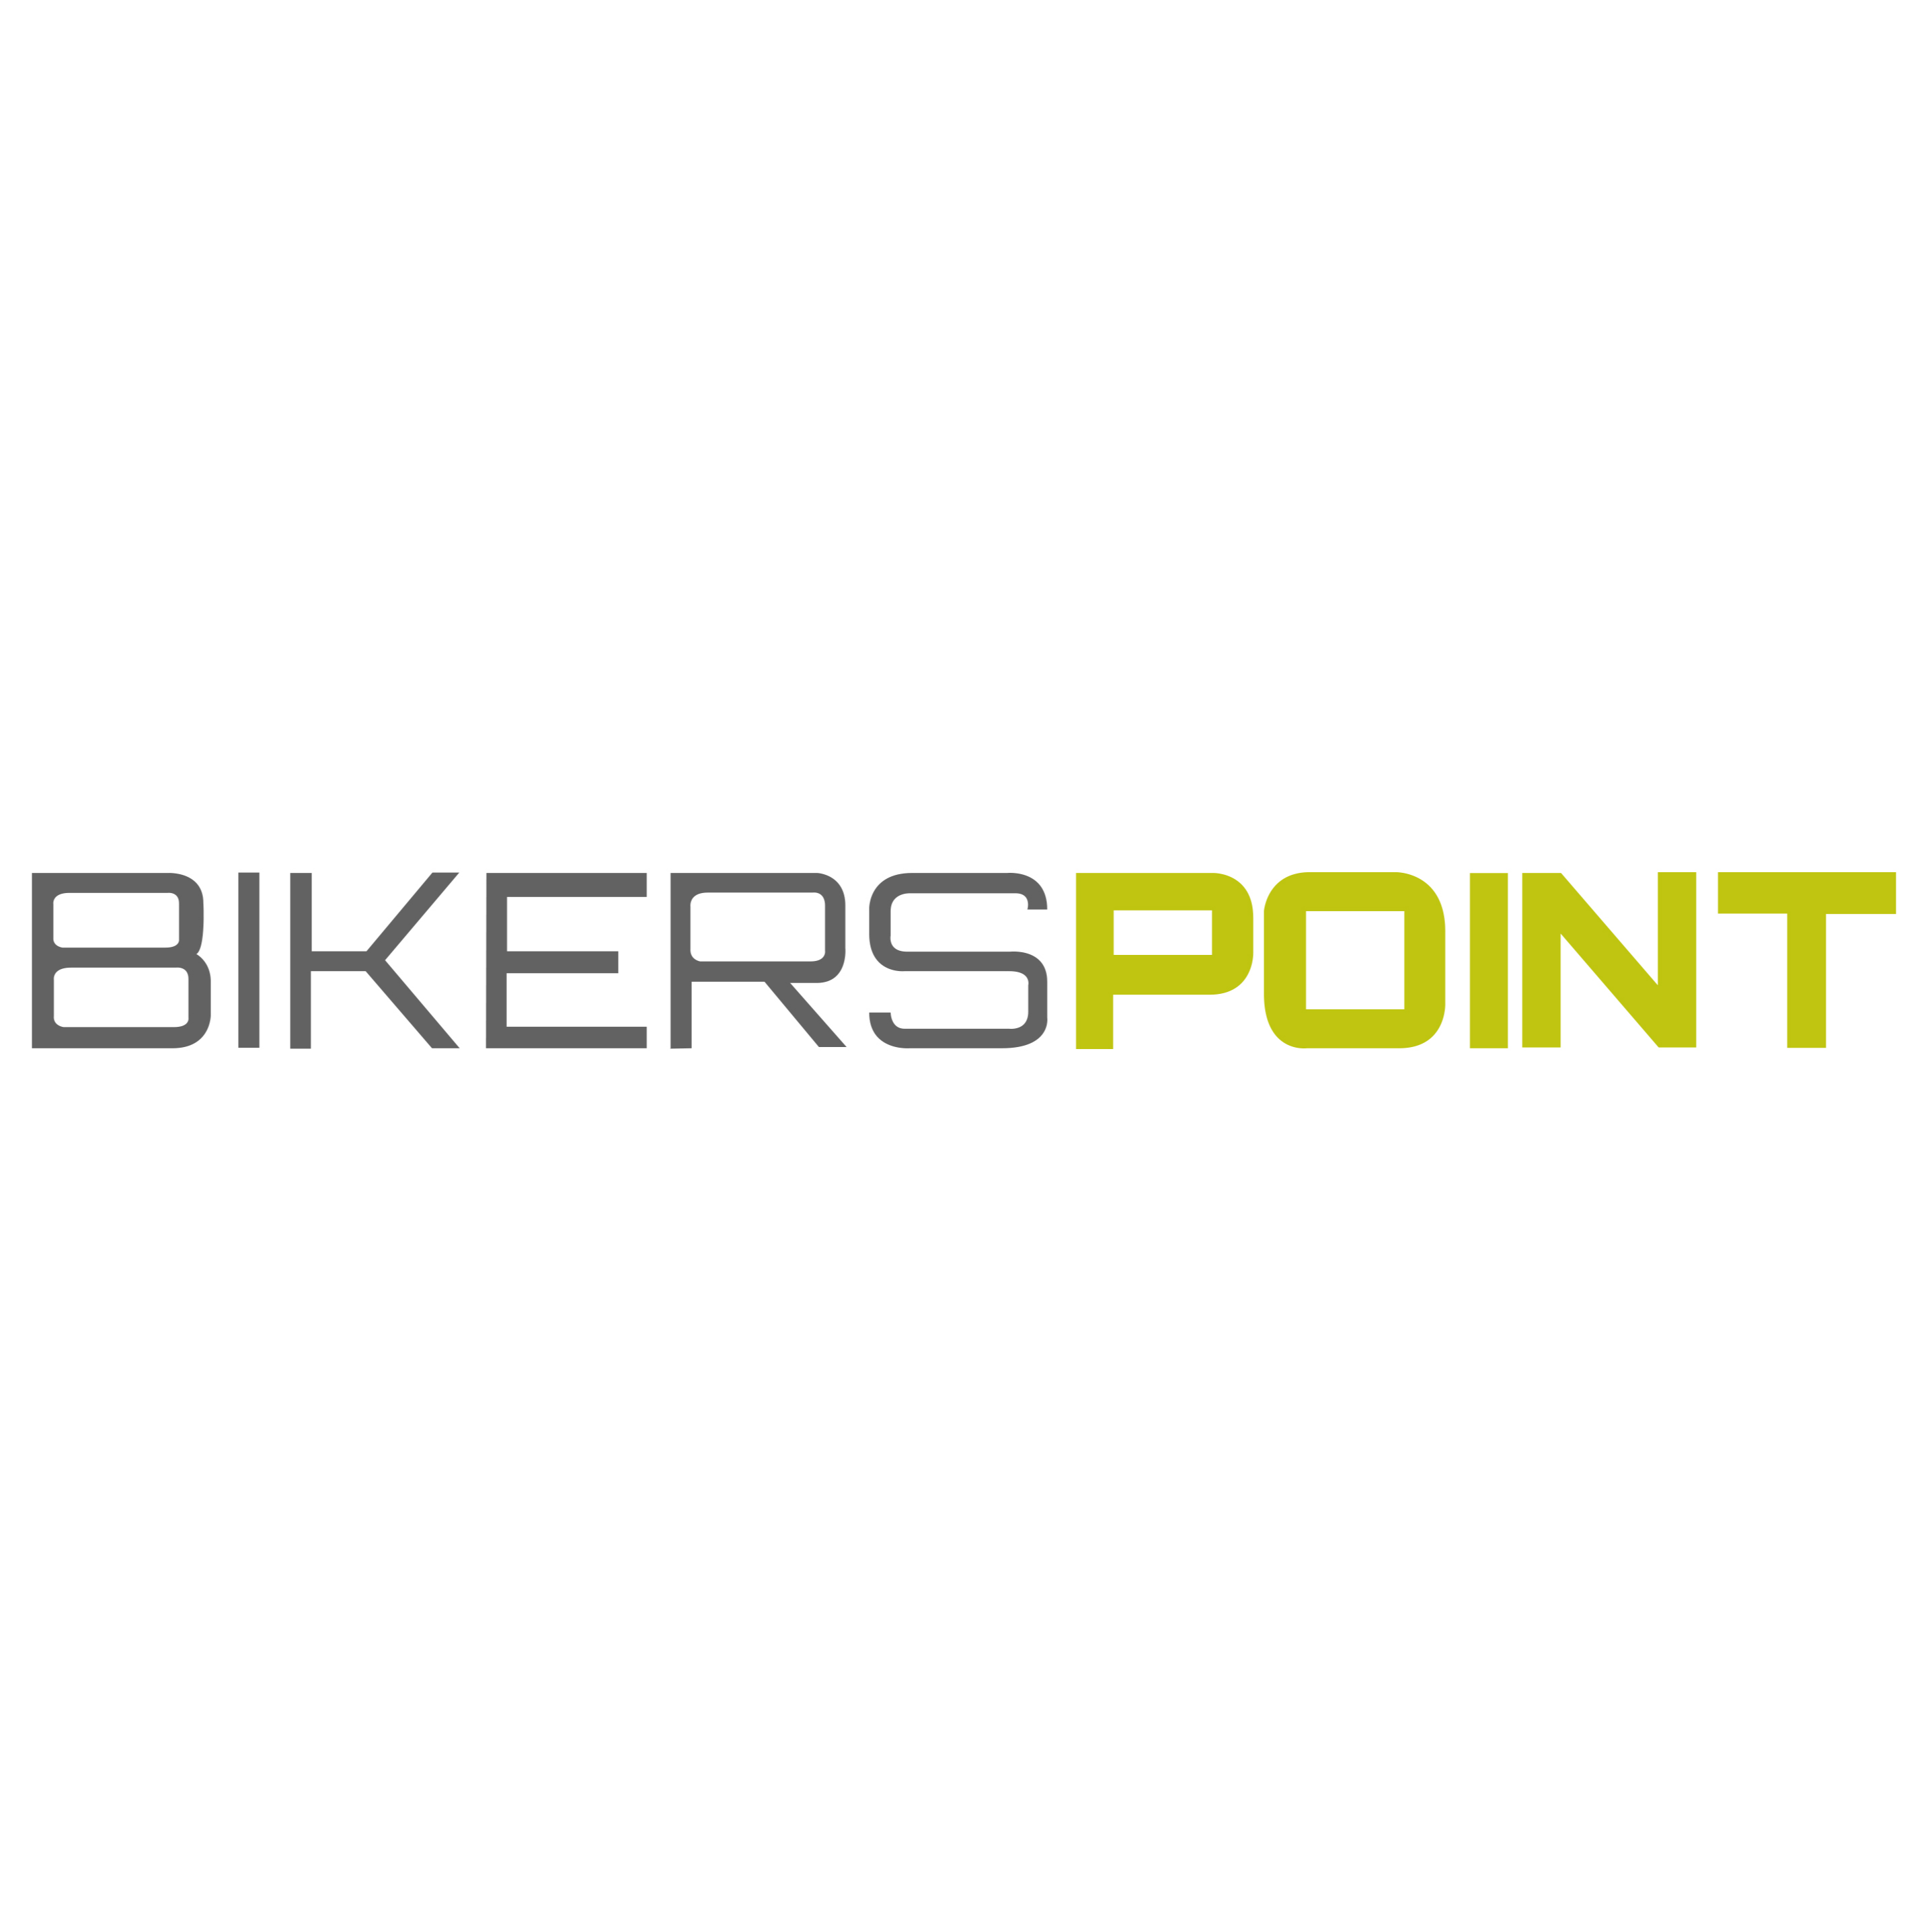 Bikers Point